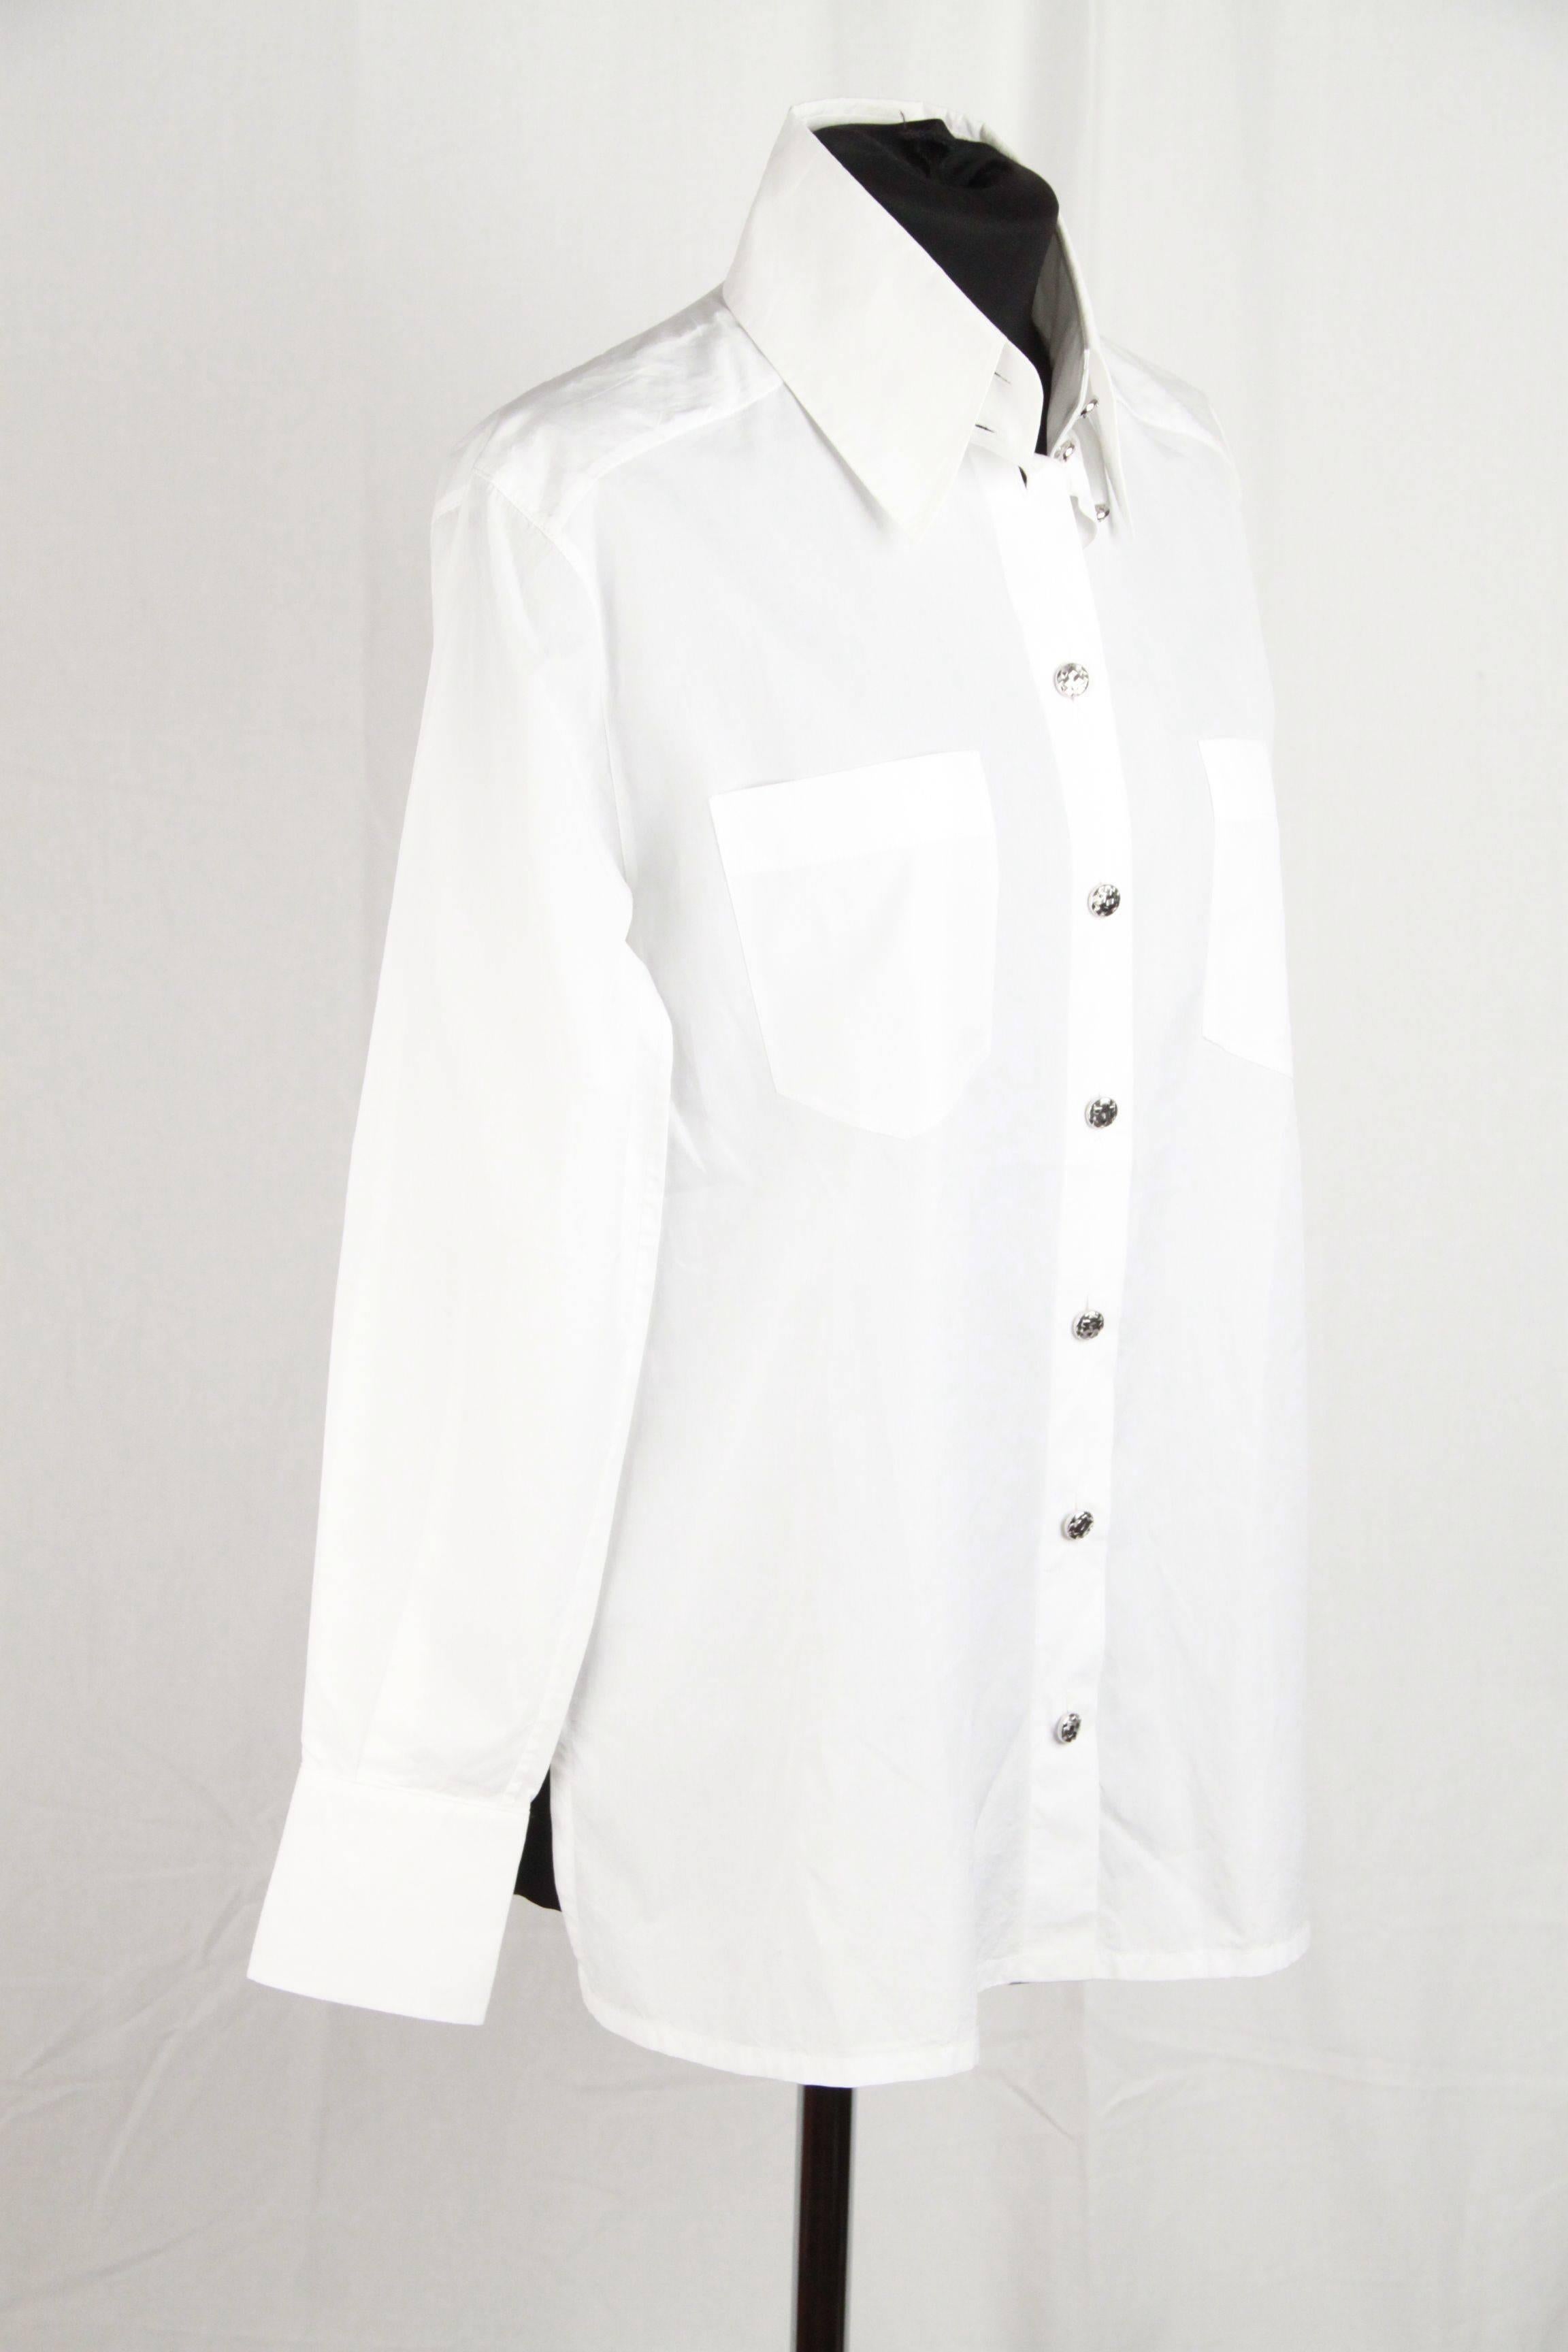 chanel white shirt